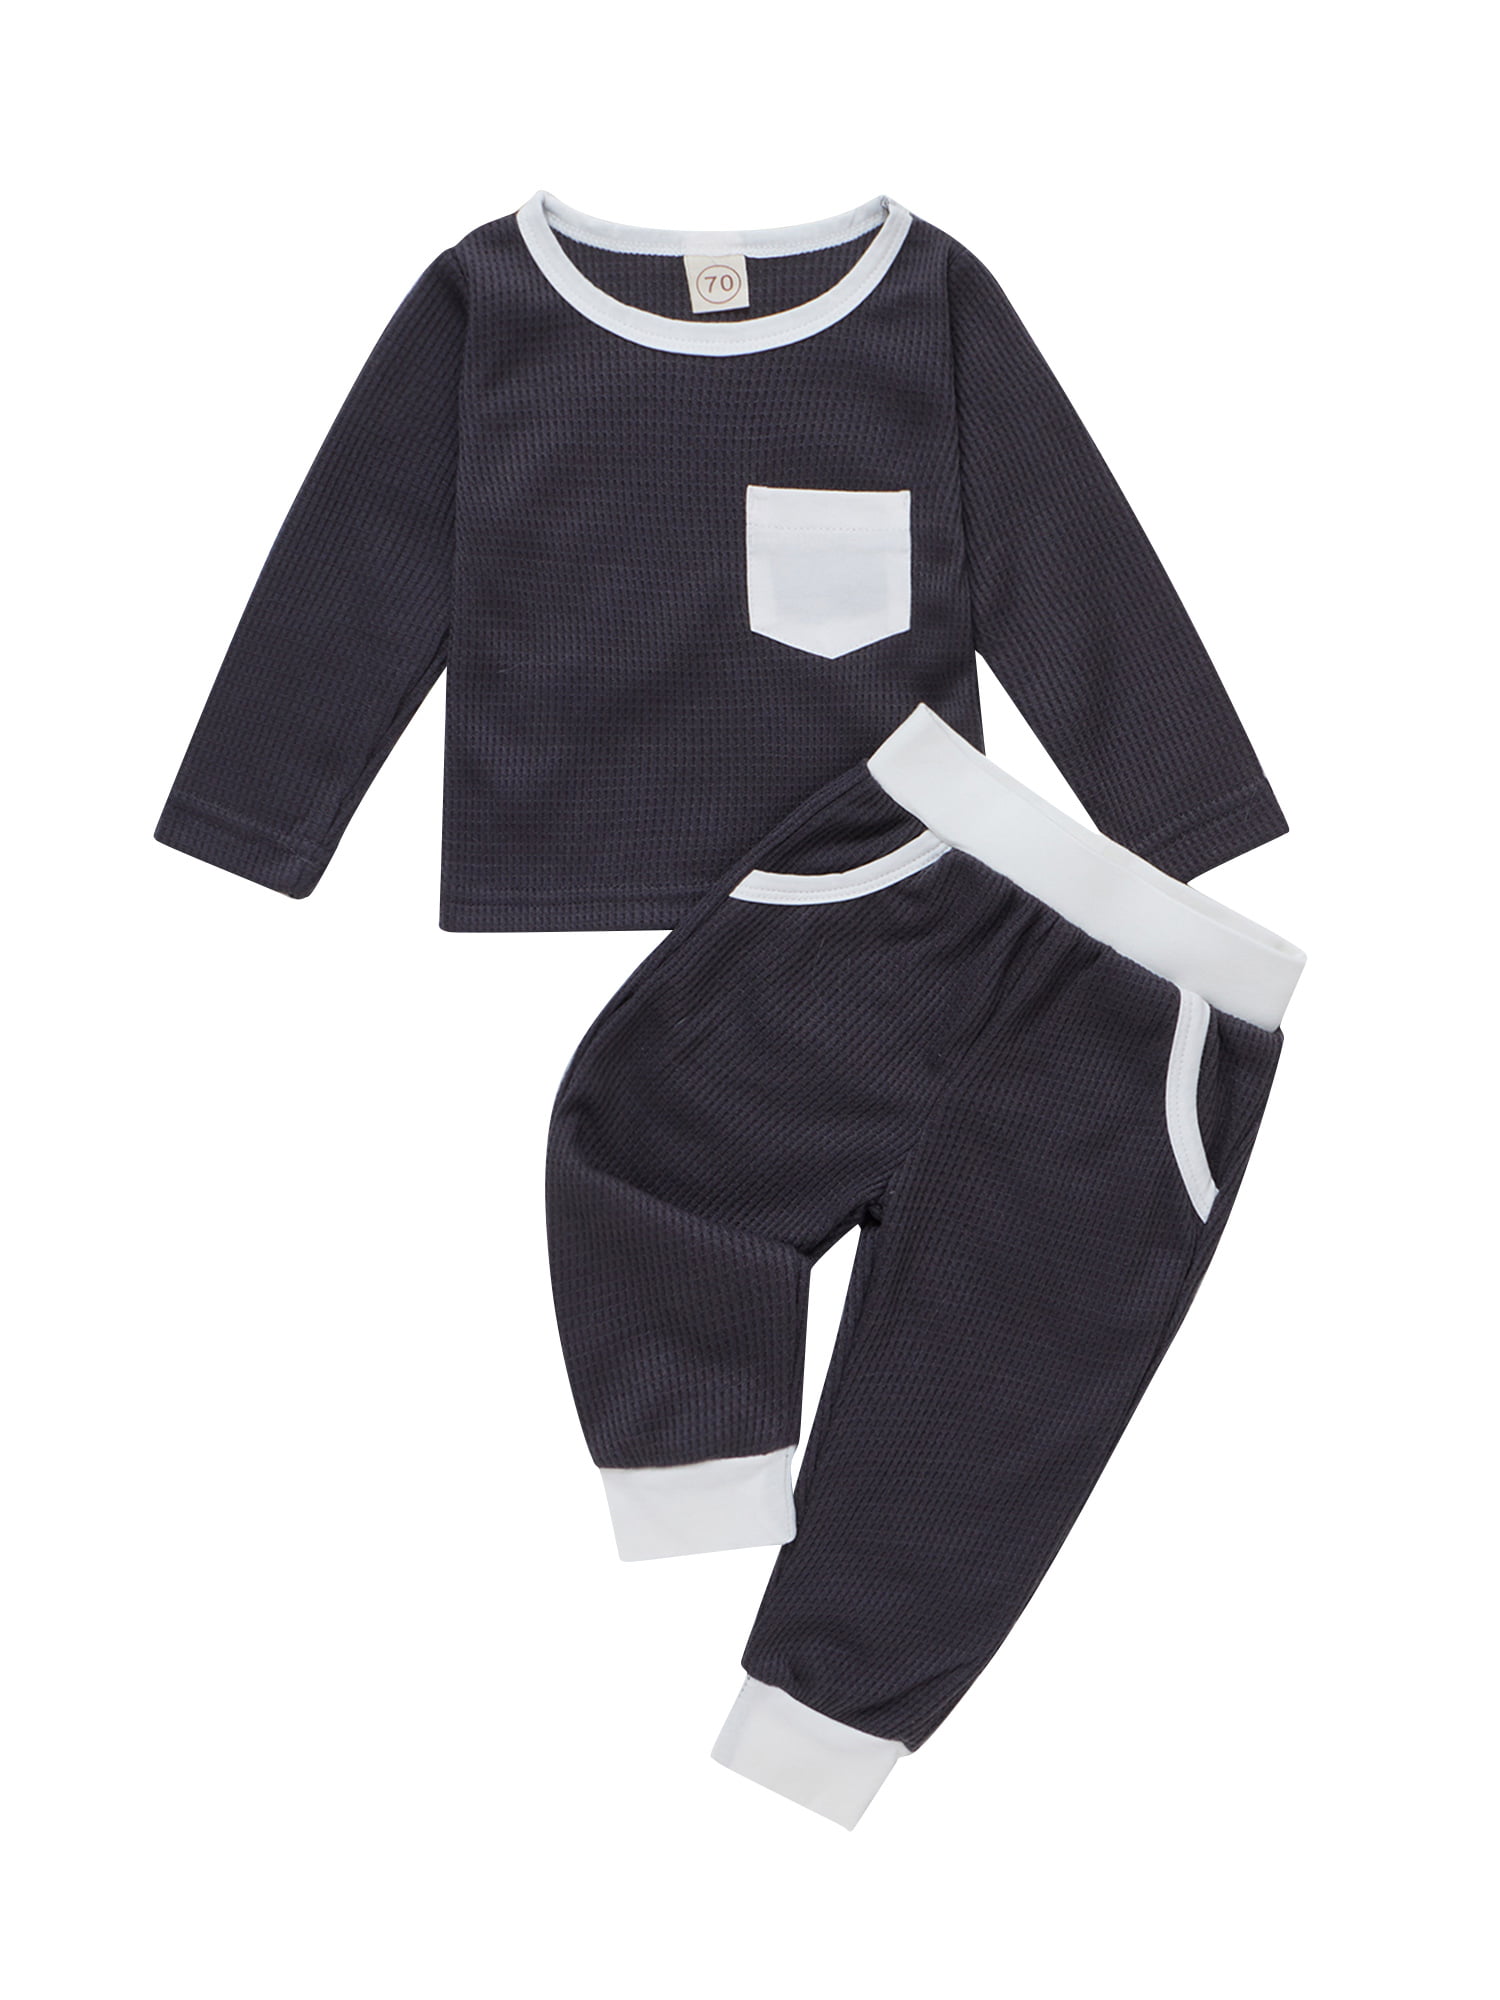 ALALIMINI Baby Toddler Pajama Set for Boys&Girls Warm Long Sleeve Sleepwear 2-Pack/Set Soft Underwear 2-8 